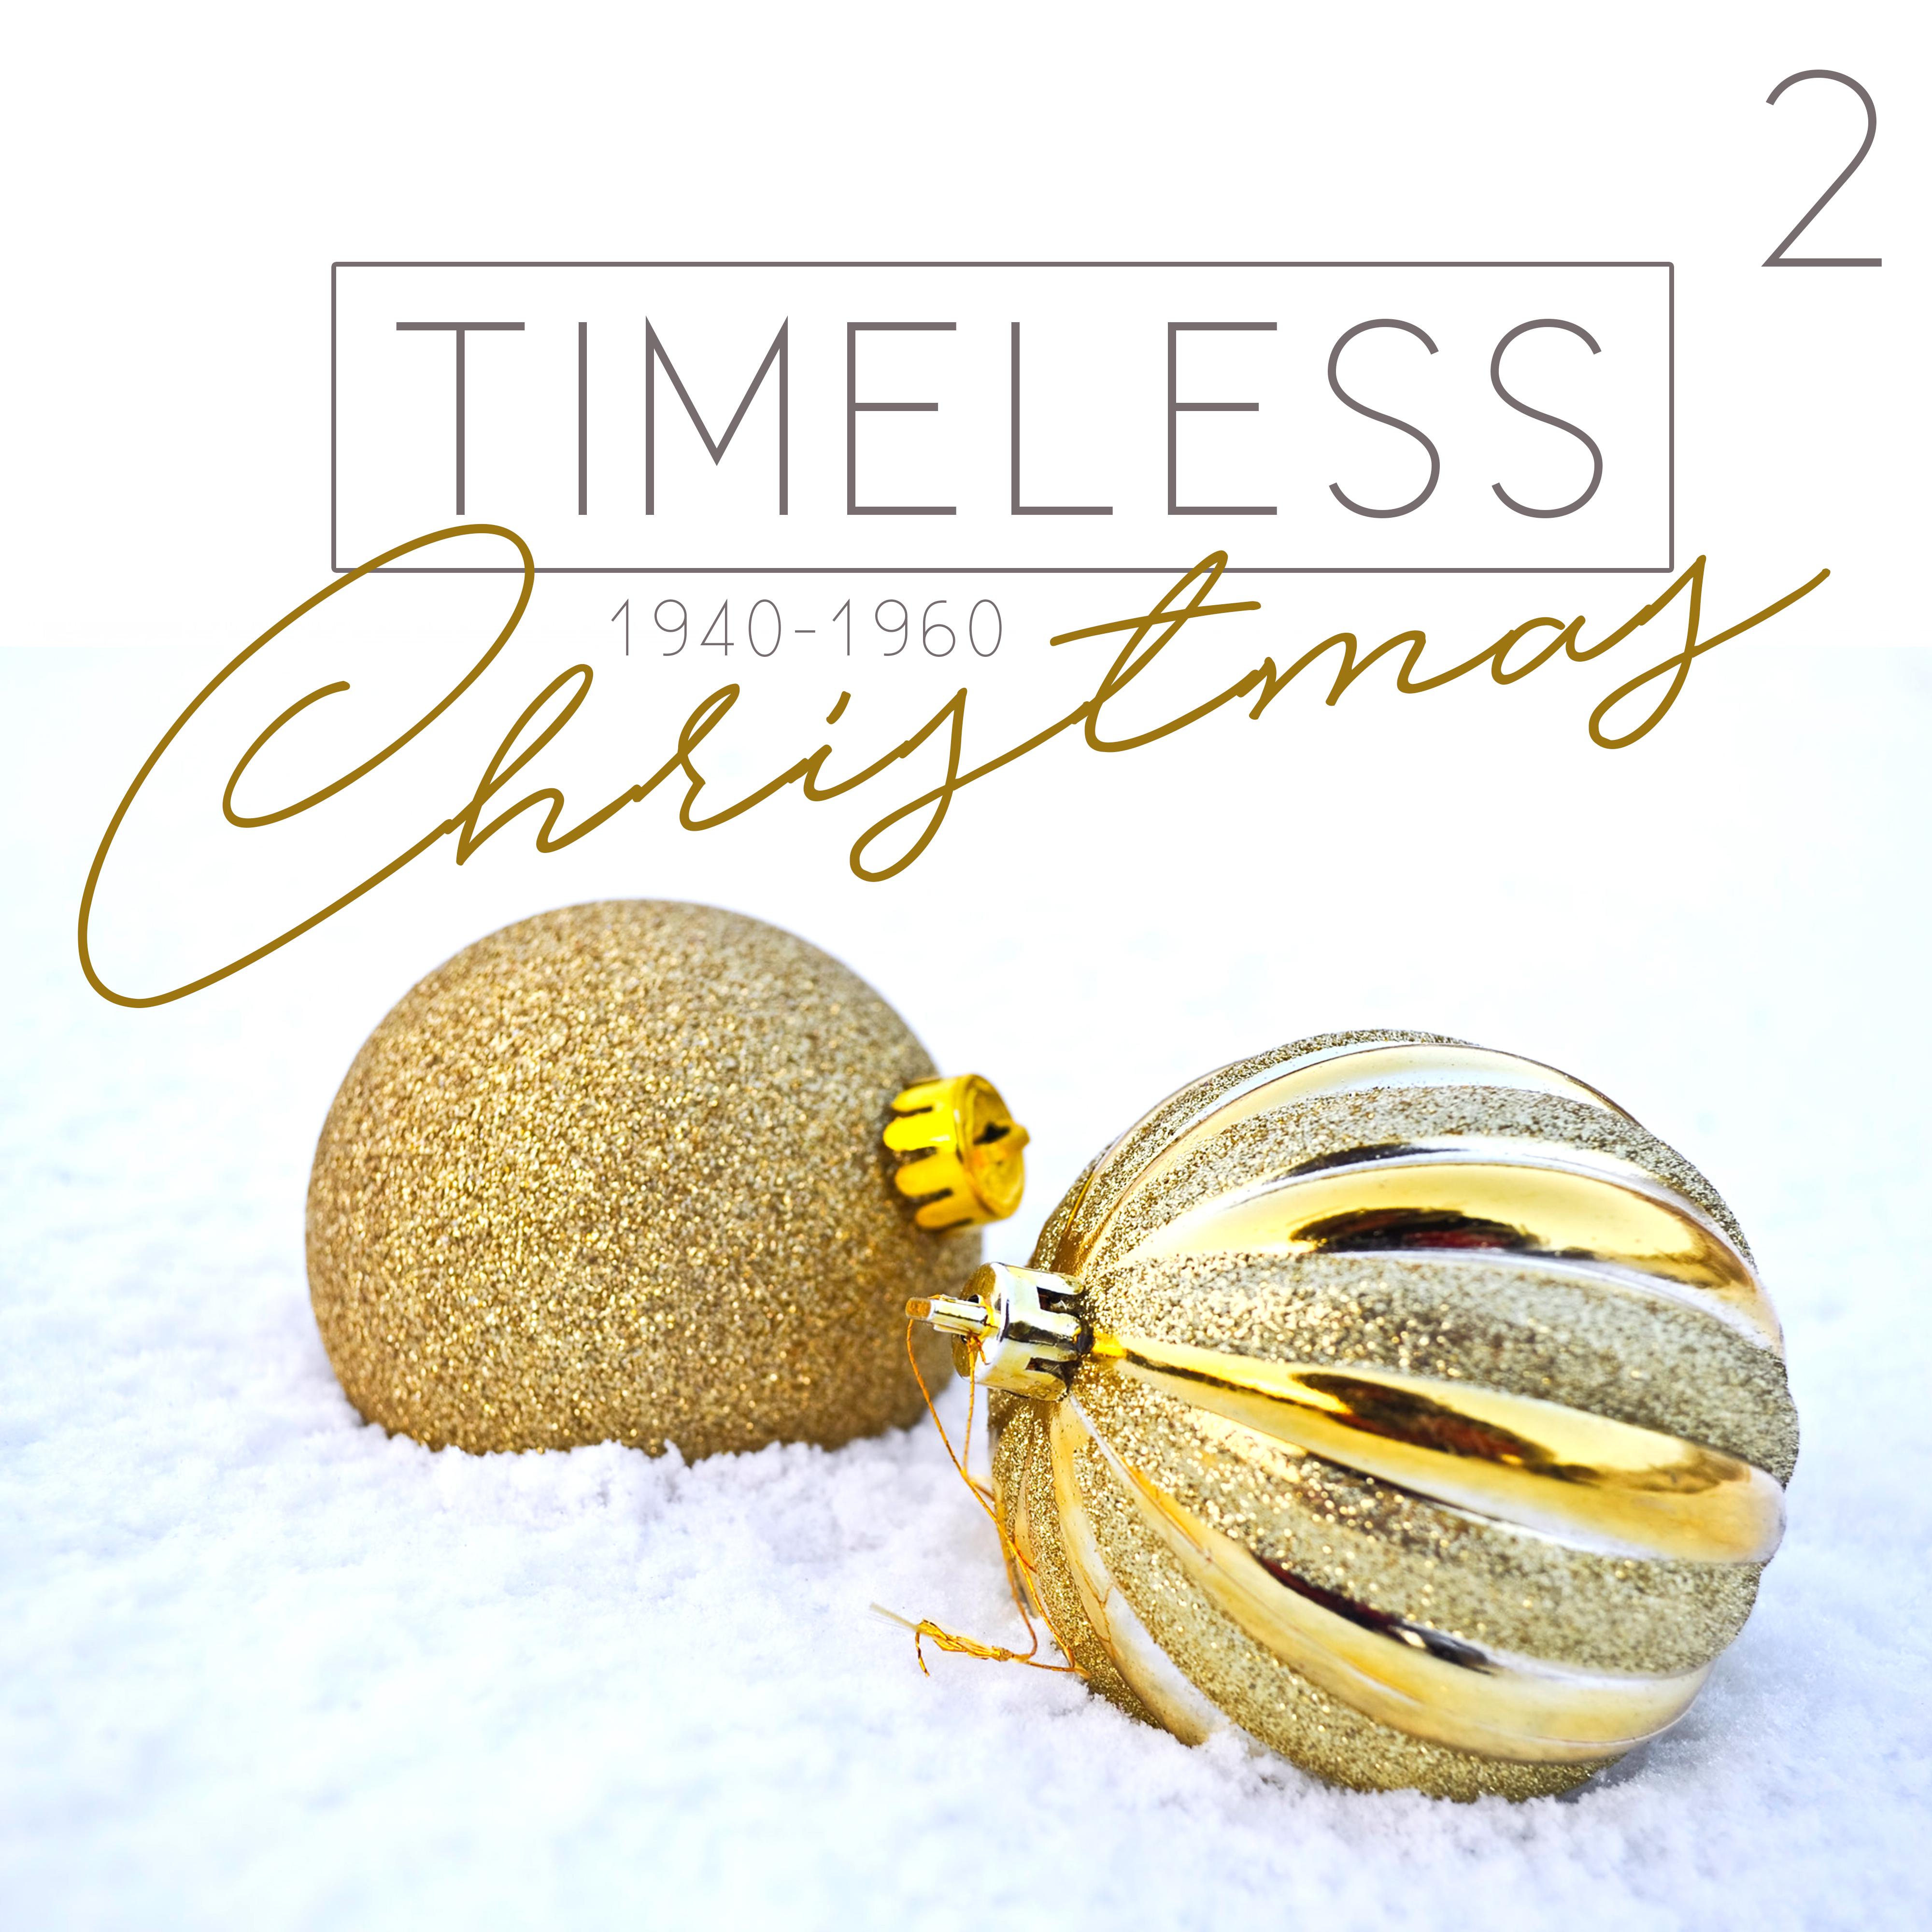 Timeless Christmas (1940 - 1960), Vol. 2